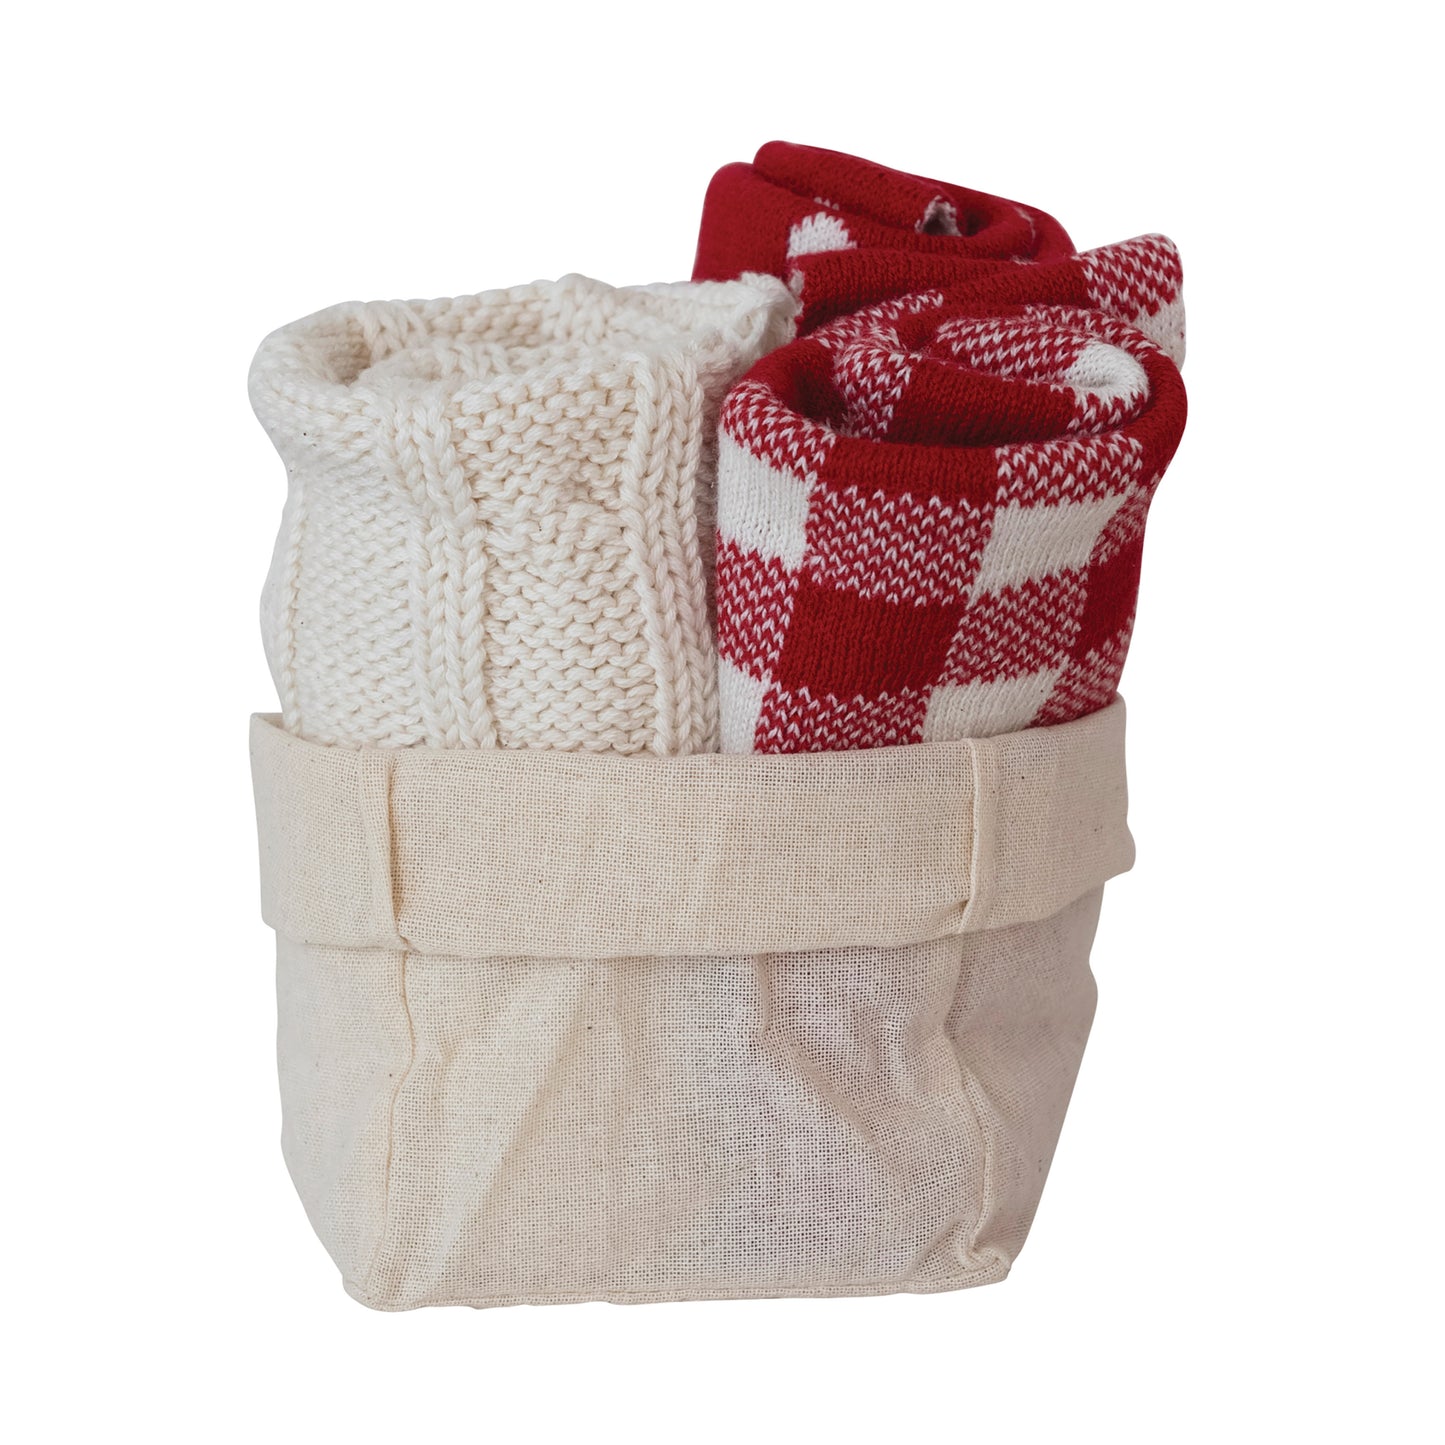 Cotton Knit Dish Cloths w/ Patterns